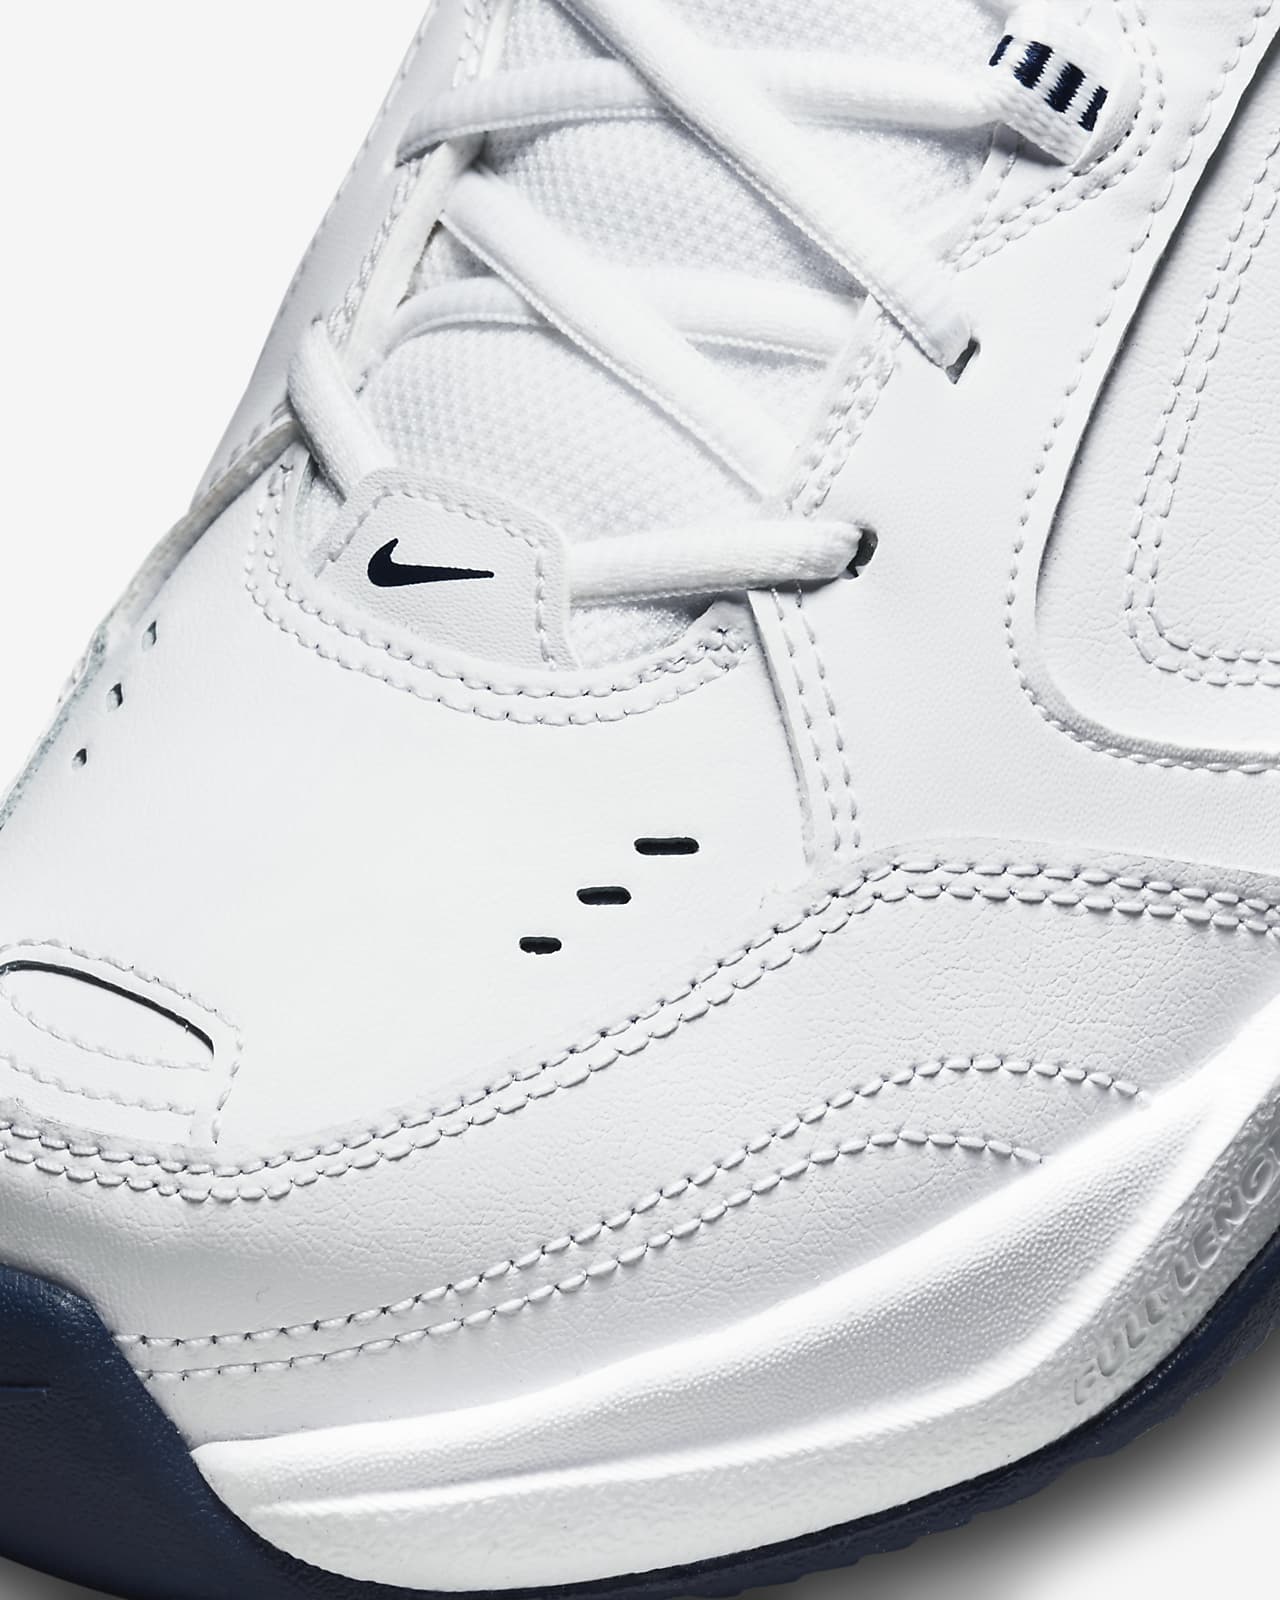 Aanwezigheid Tientallen Pygmalion Nike Air Monarch IV Men's Workout Shoes (Extra Wide). Nike.com